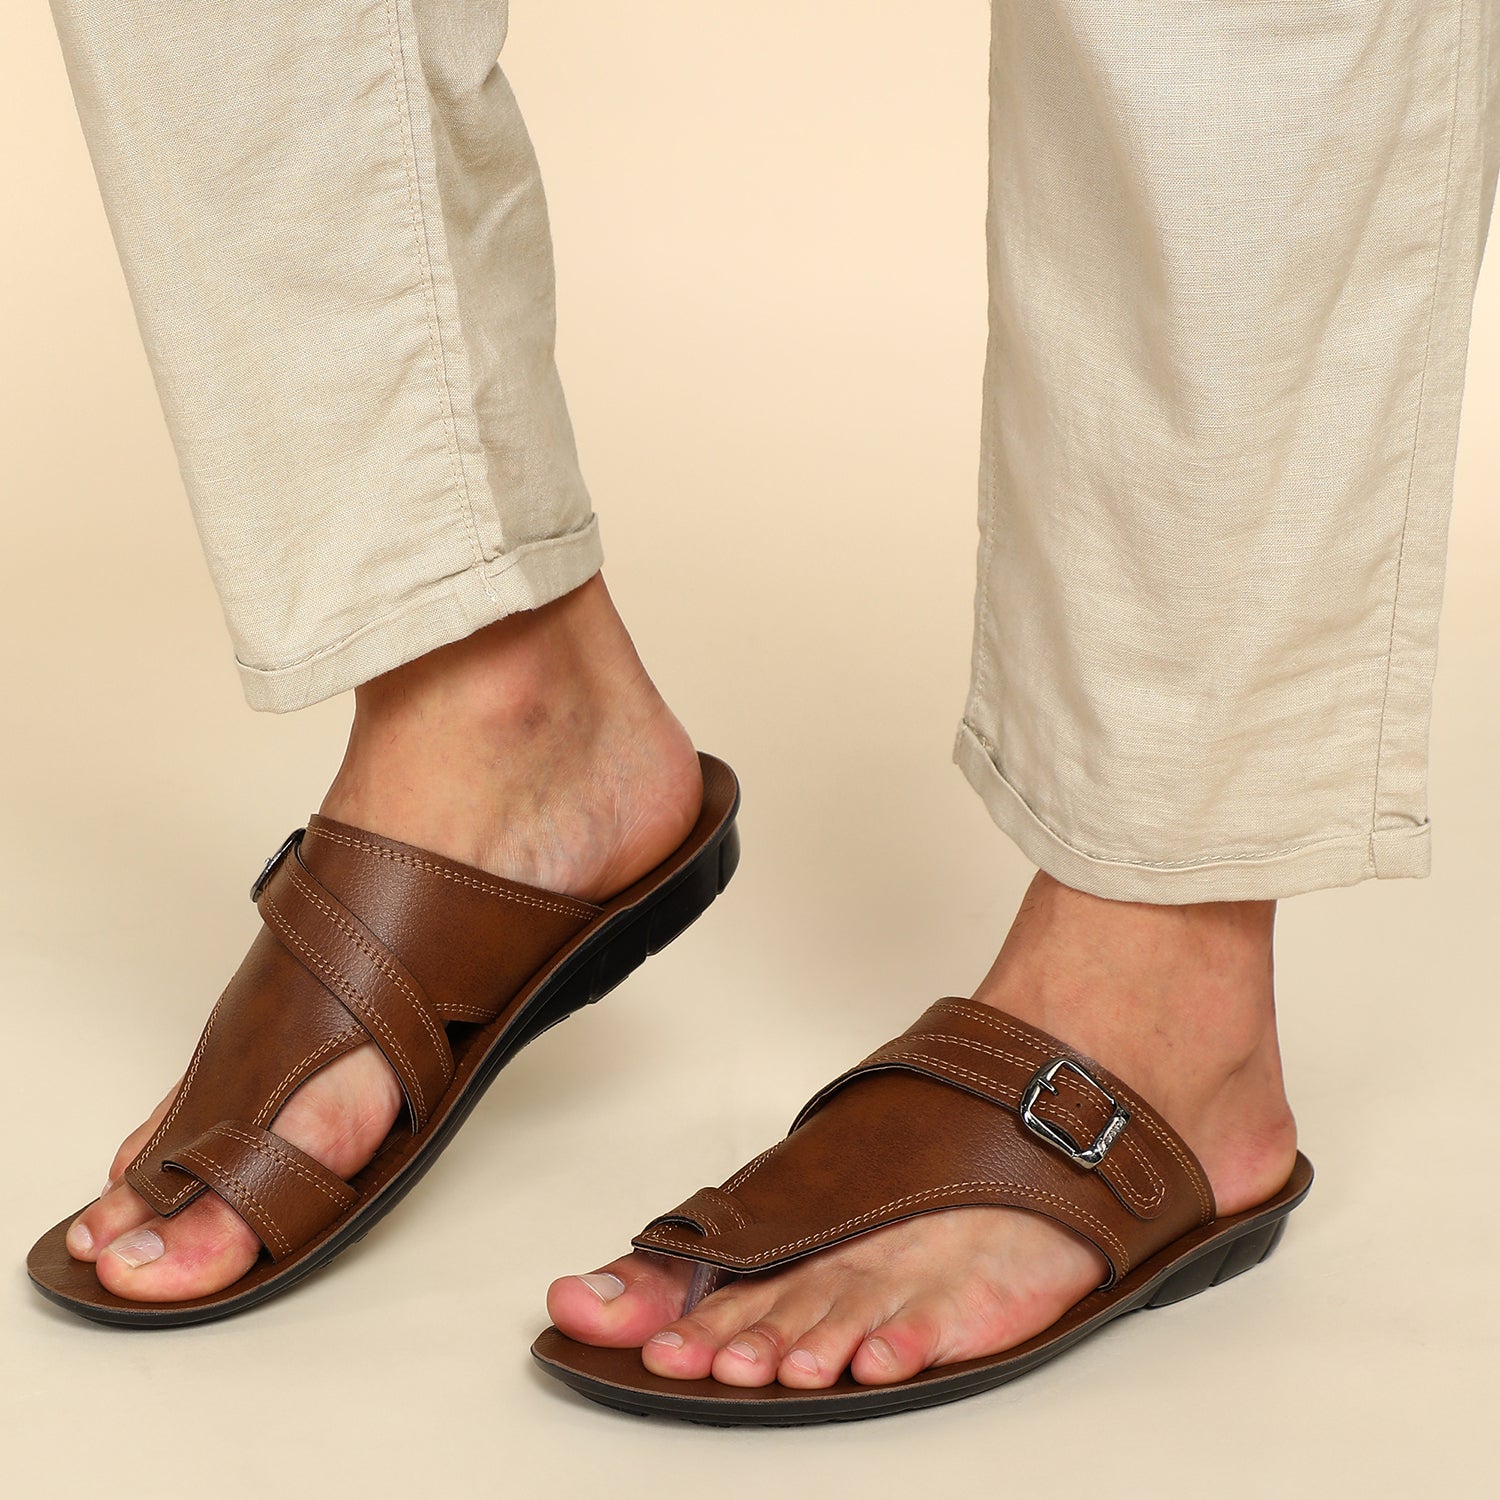 Buy Men Tan Ethnic Pathani Sandals Online | SKU: 60-1459-23-41-Metro Shoes